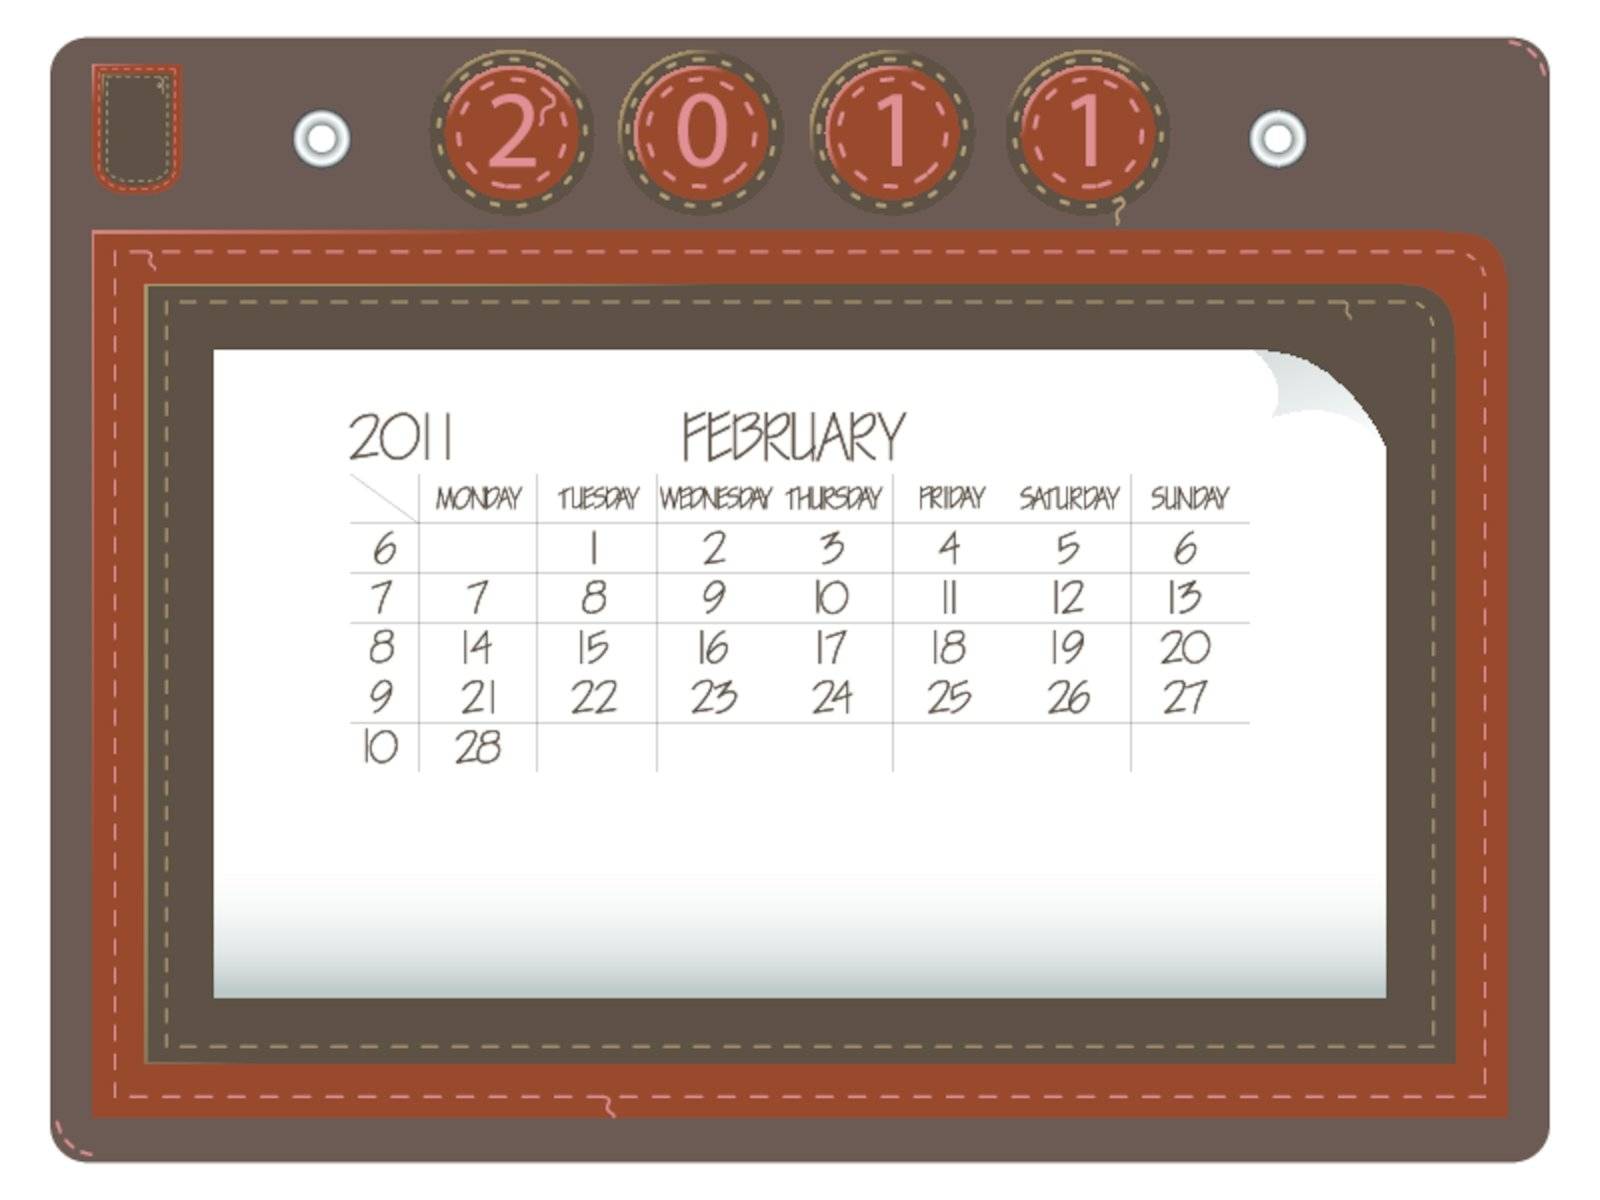 february 2011 leather calendar against white background, abstract vector art illustration